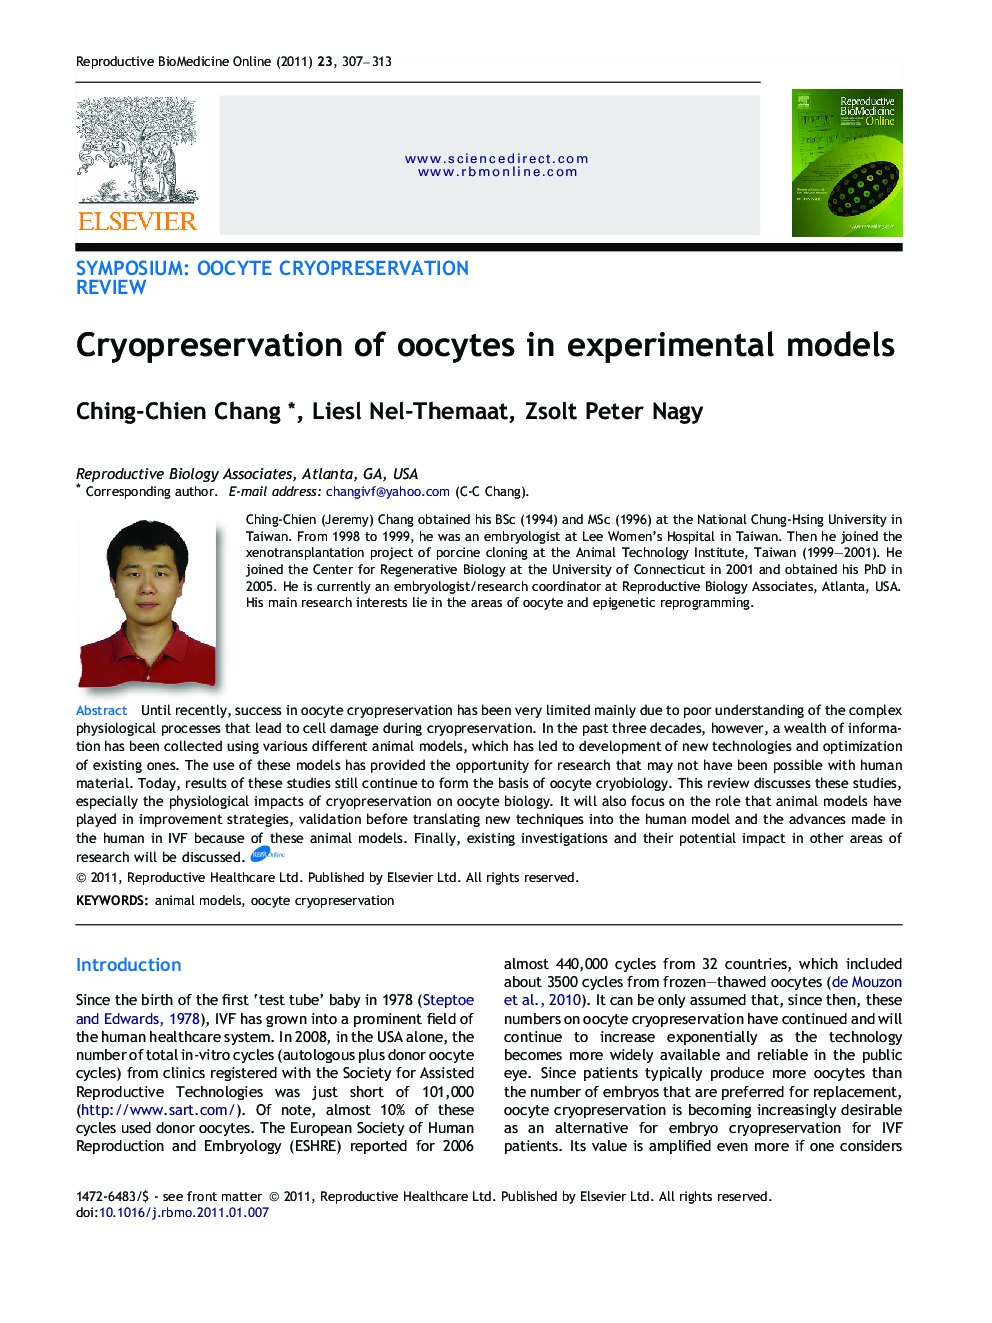 Cryopreservation of oocytes in experimental models 